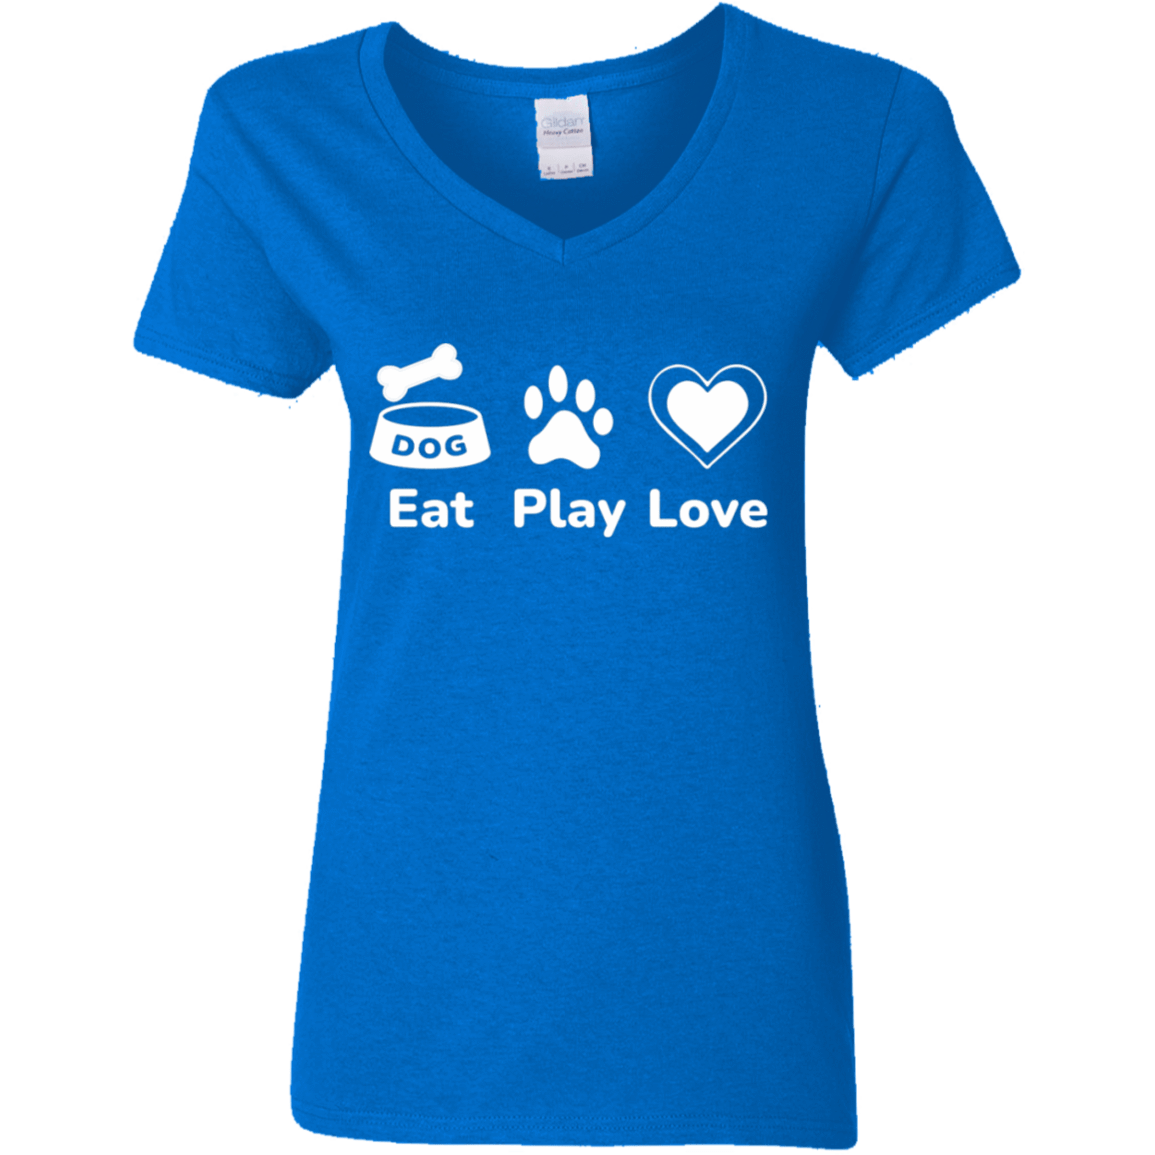 Eat Play Love - Ladies V Neck.